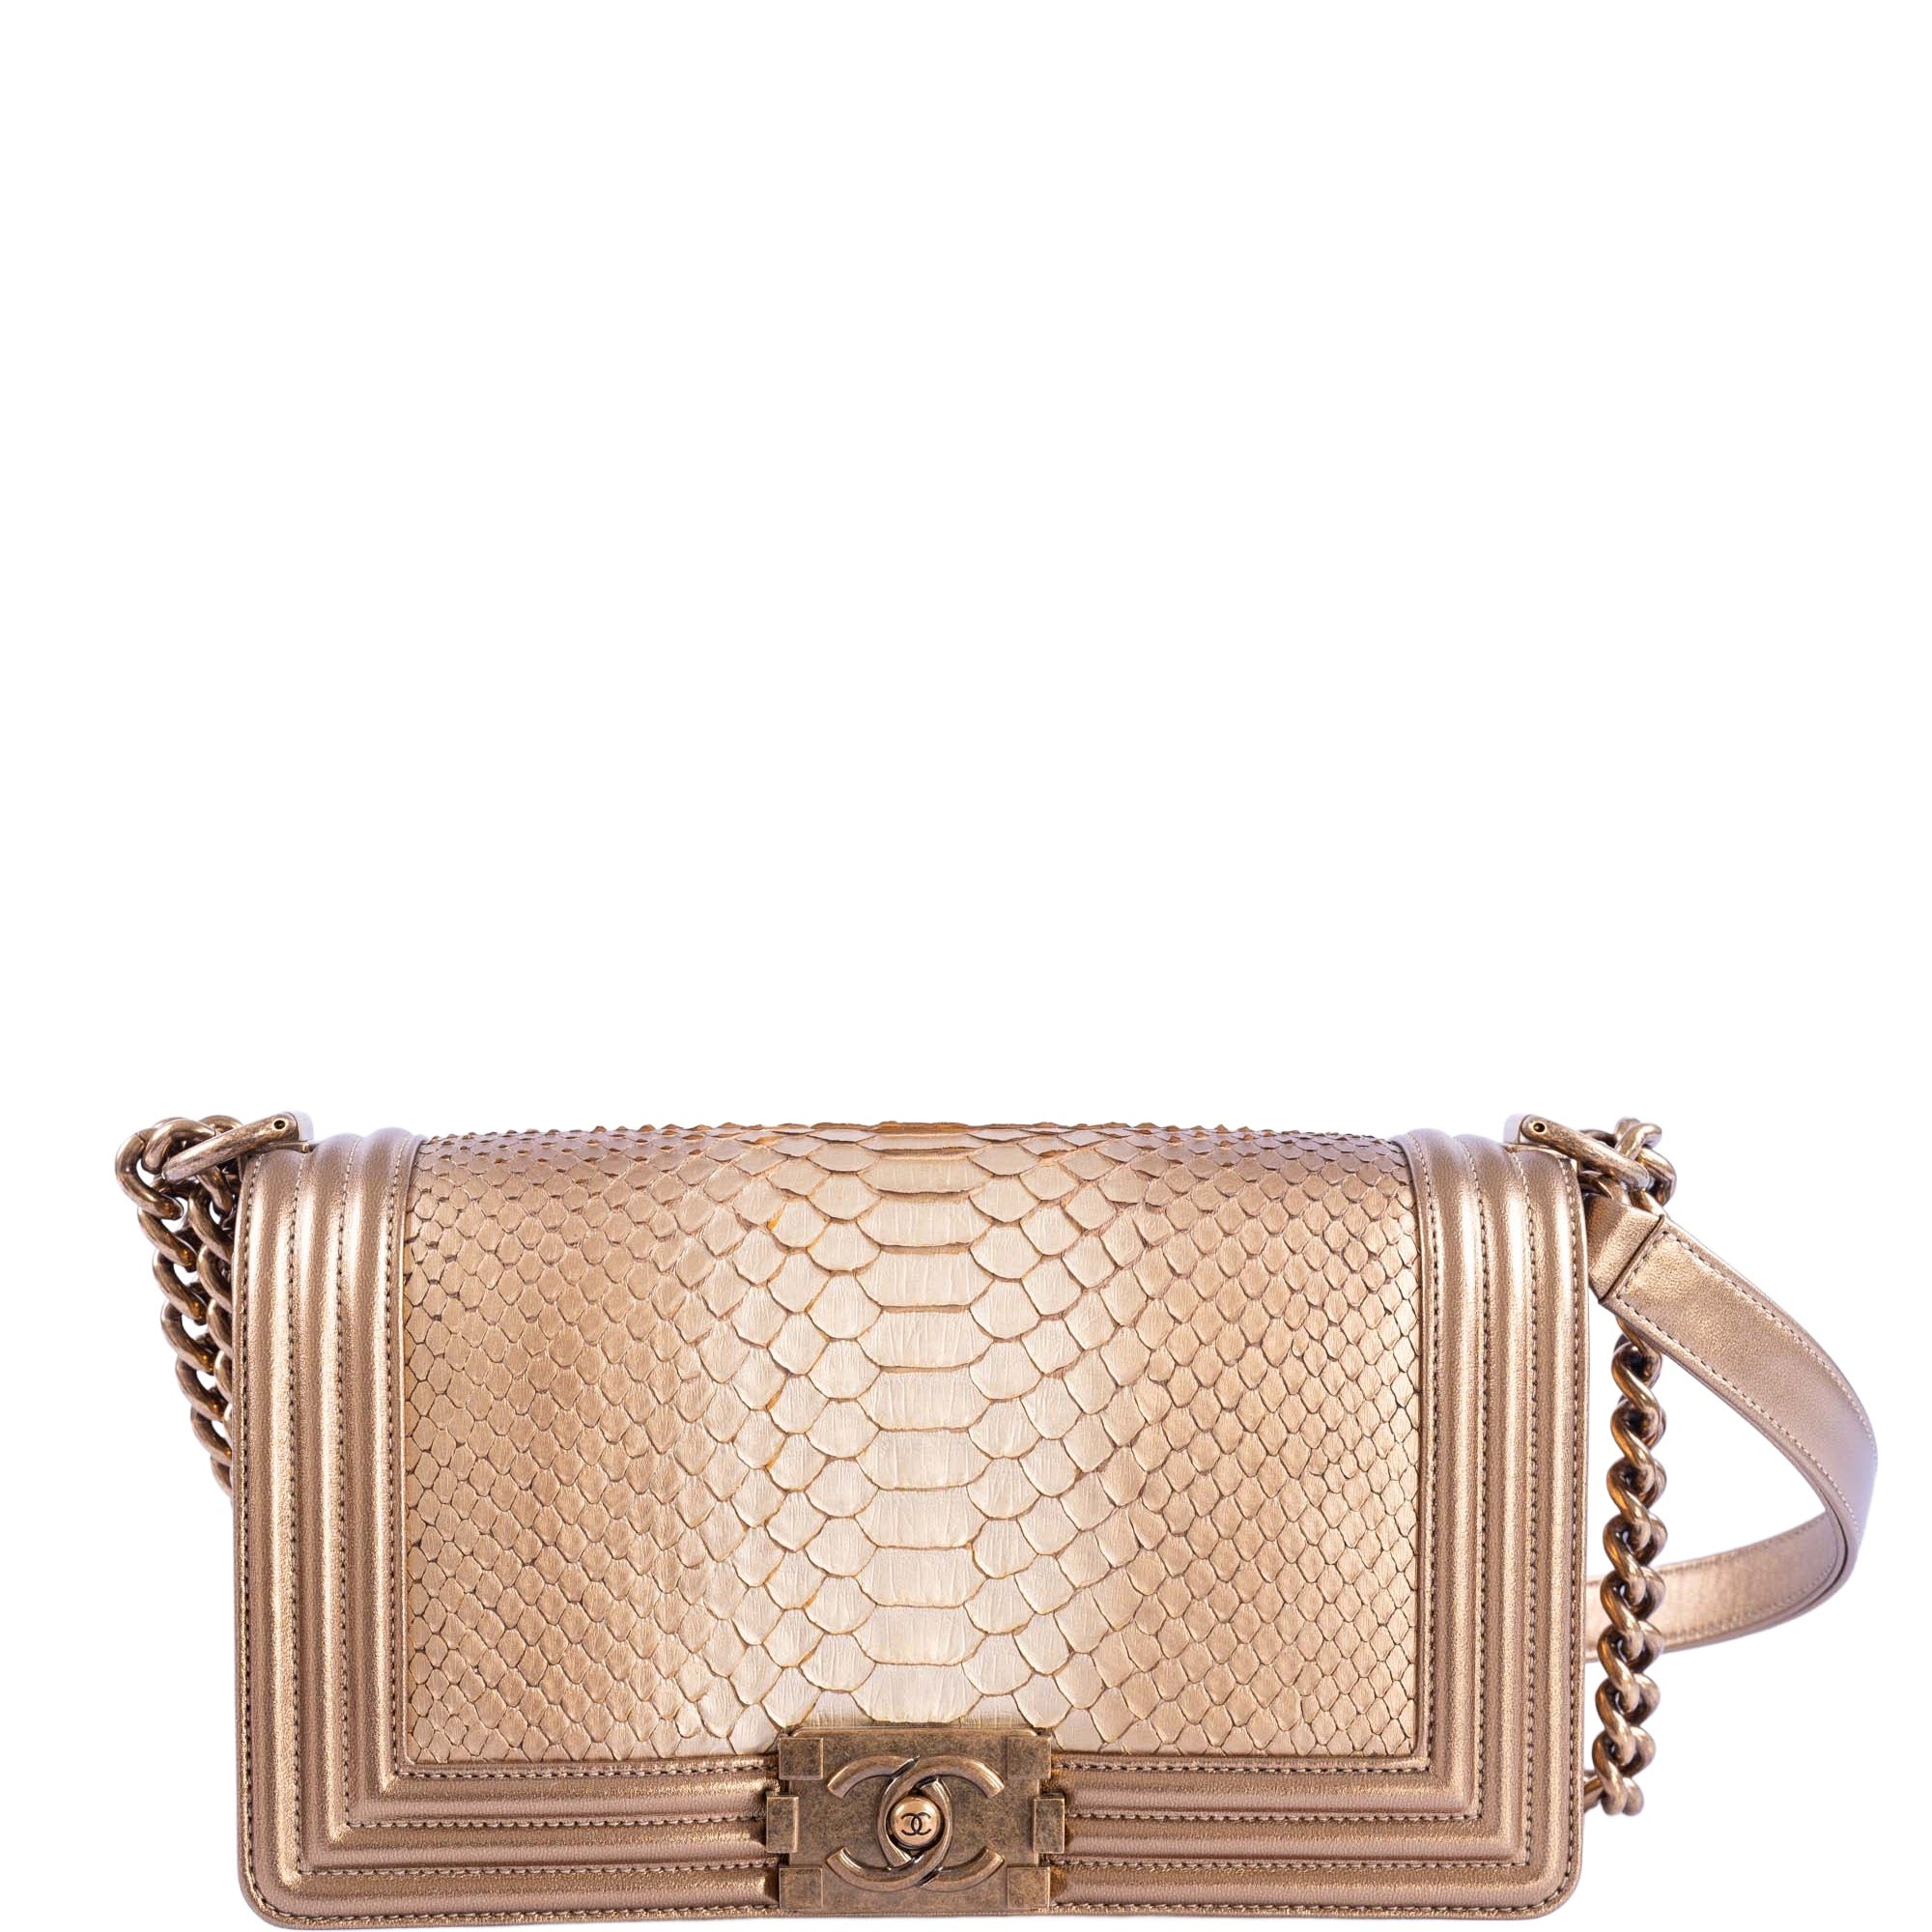 Chanel Medium Boy Flapbag Matte Gold Python Limited